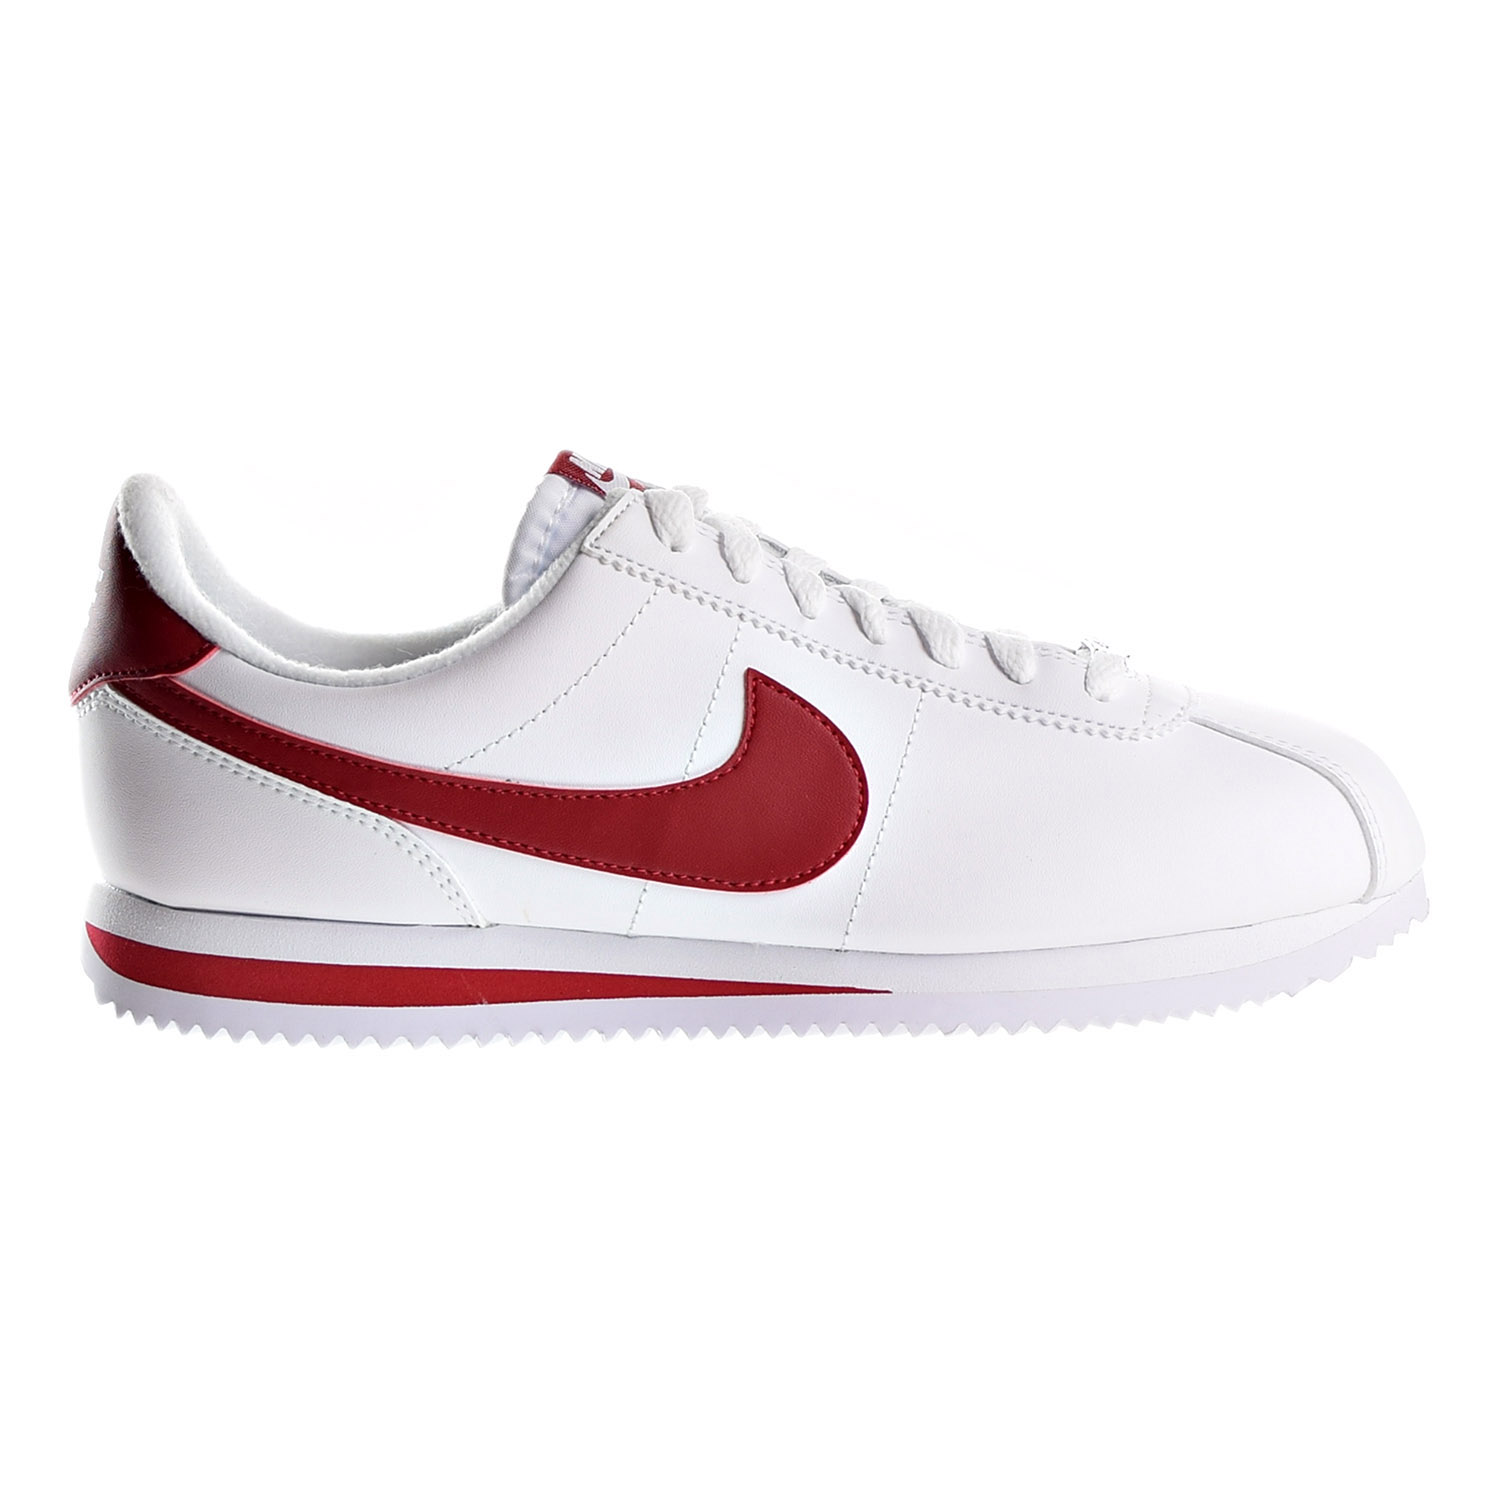 Nike Cortez Basic Leather Men's White/Gym Red 819719-101 | eBay